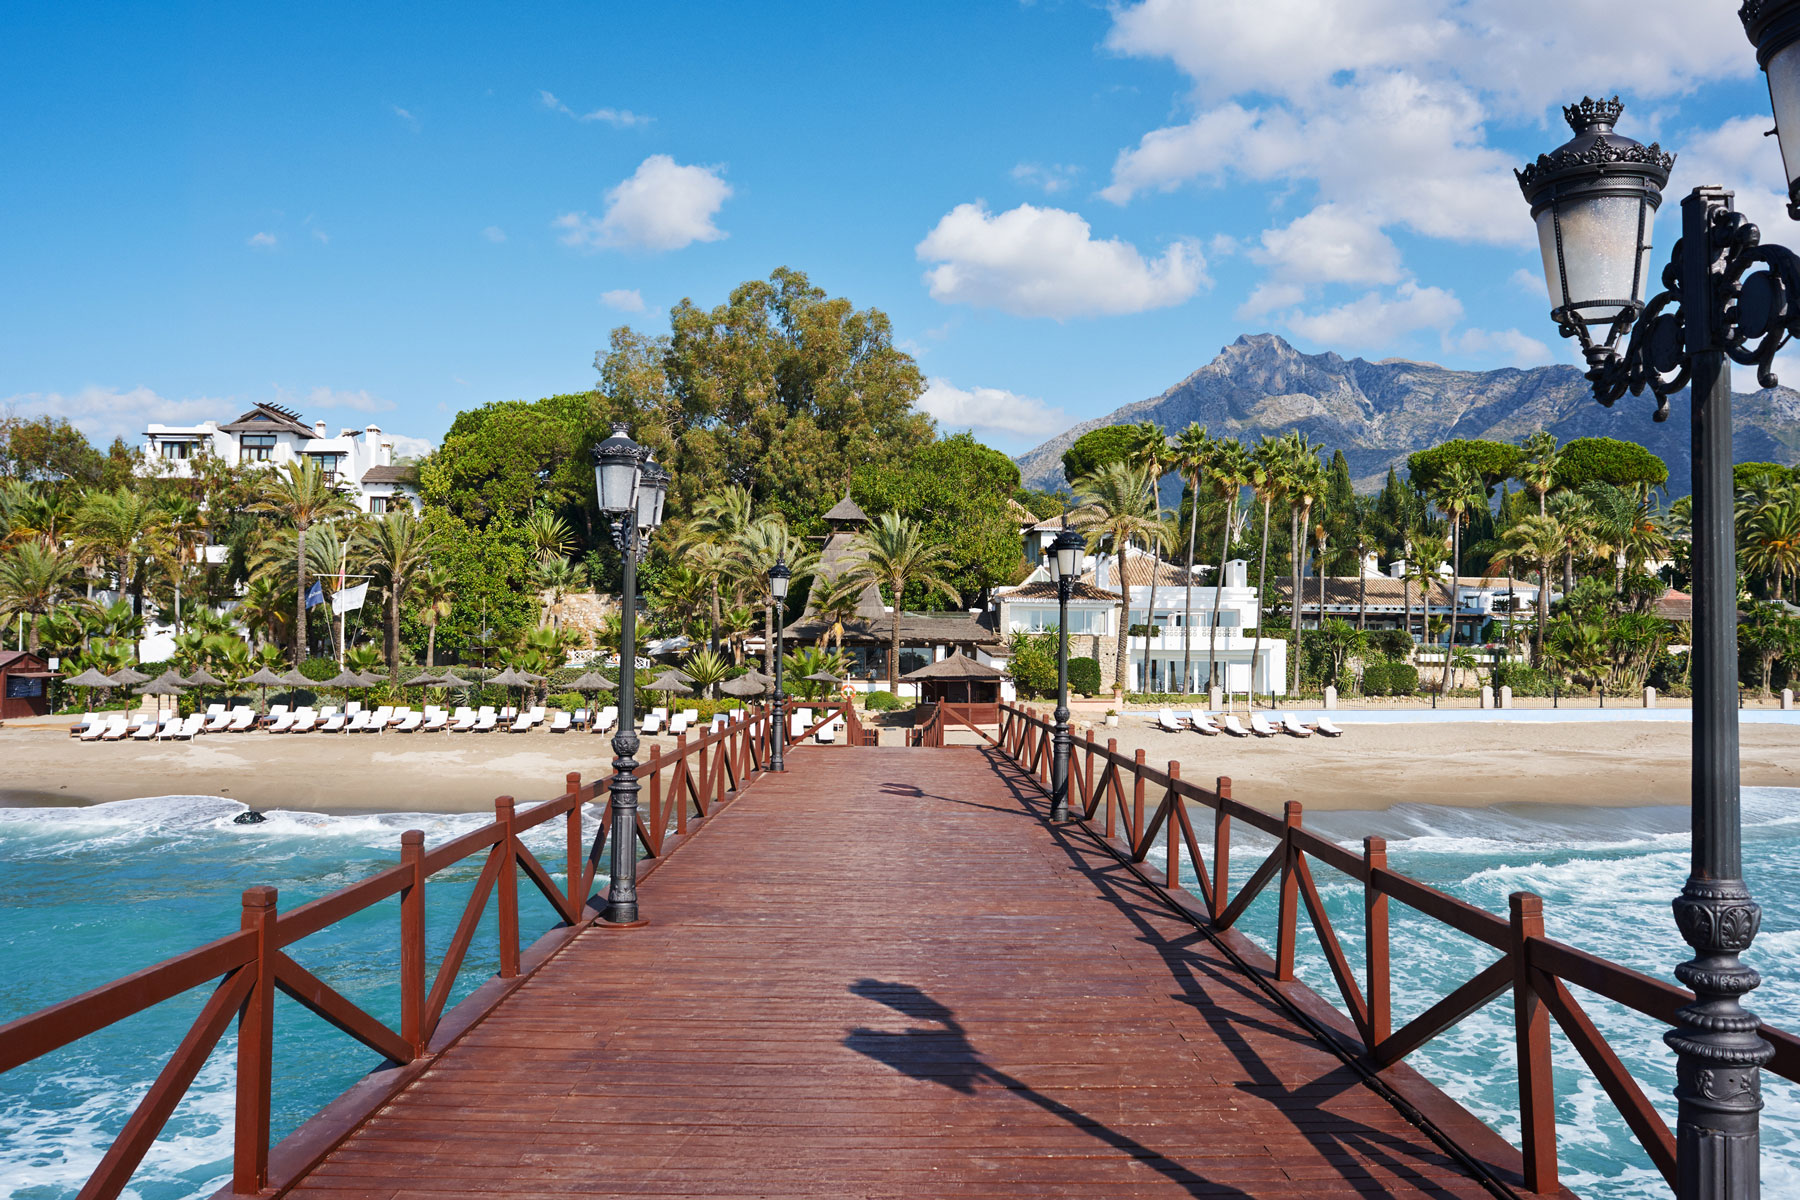 Marbella Golden Mile - Sun And Golf Properties